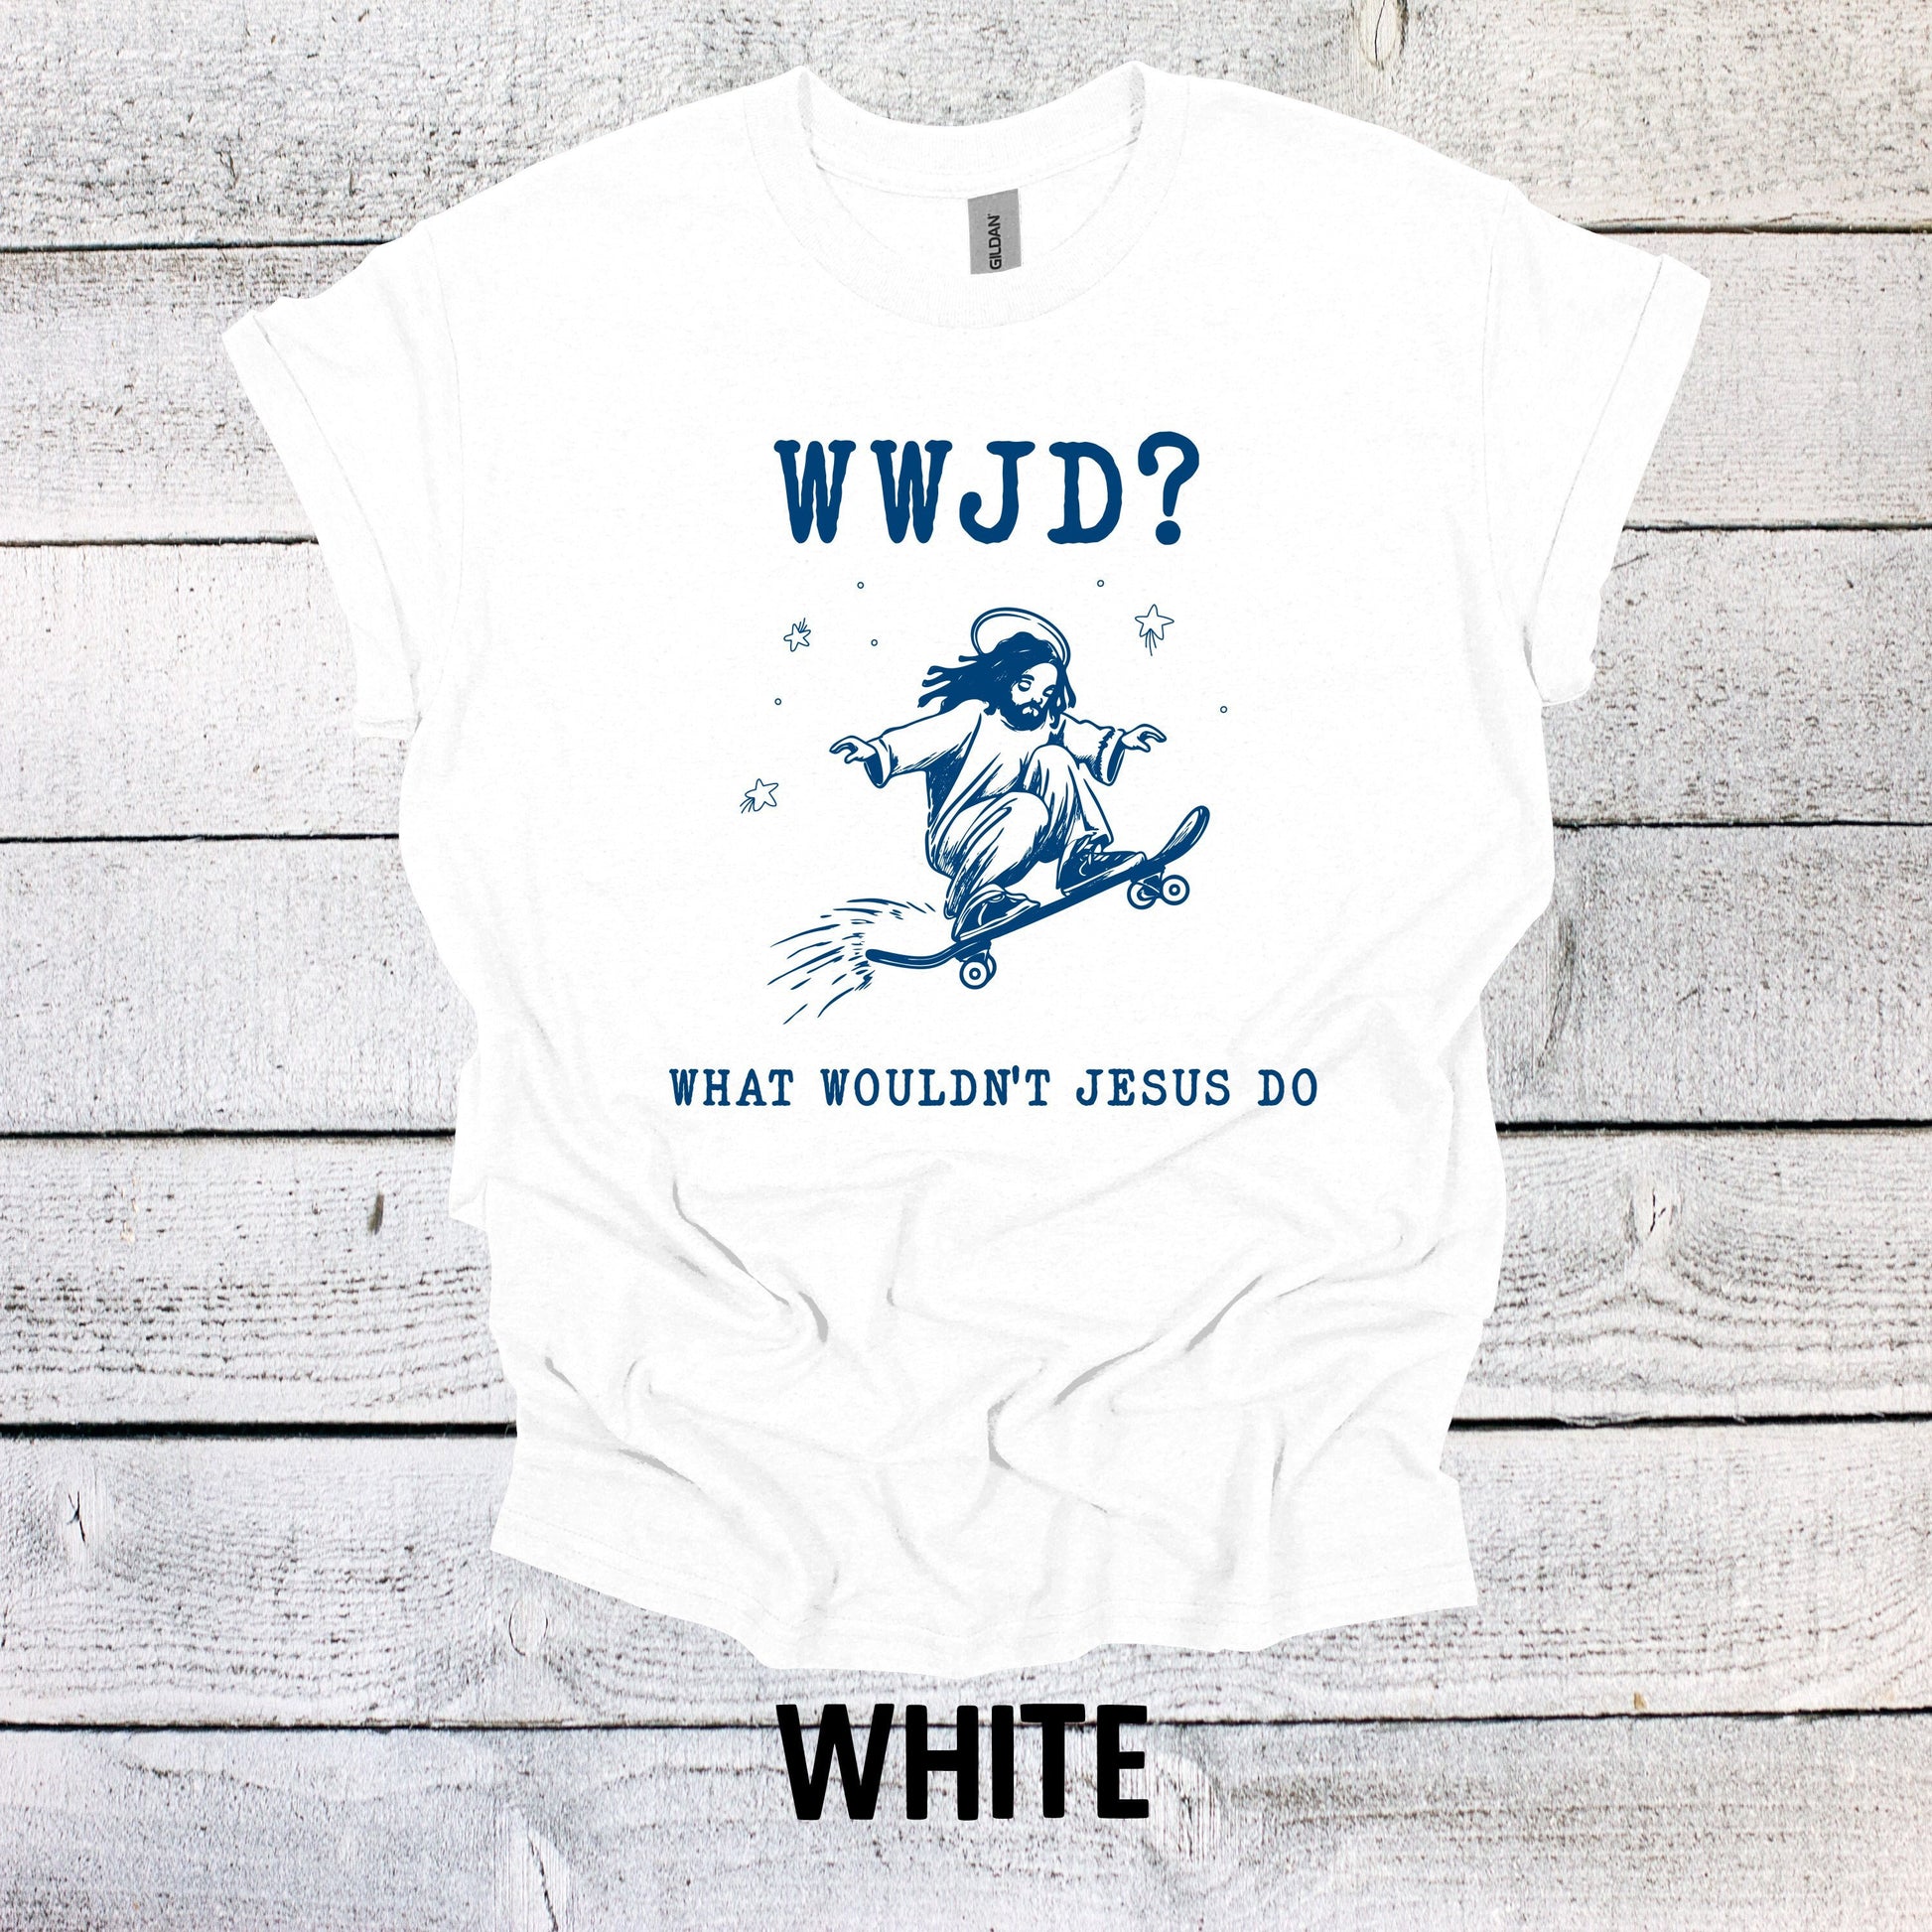 WWJD? What Would Jesus Do? Shirt Graphic Shirt Adult Vintage Funny Shirt Nostalgia Cotton Shirt Minimalist Shirt